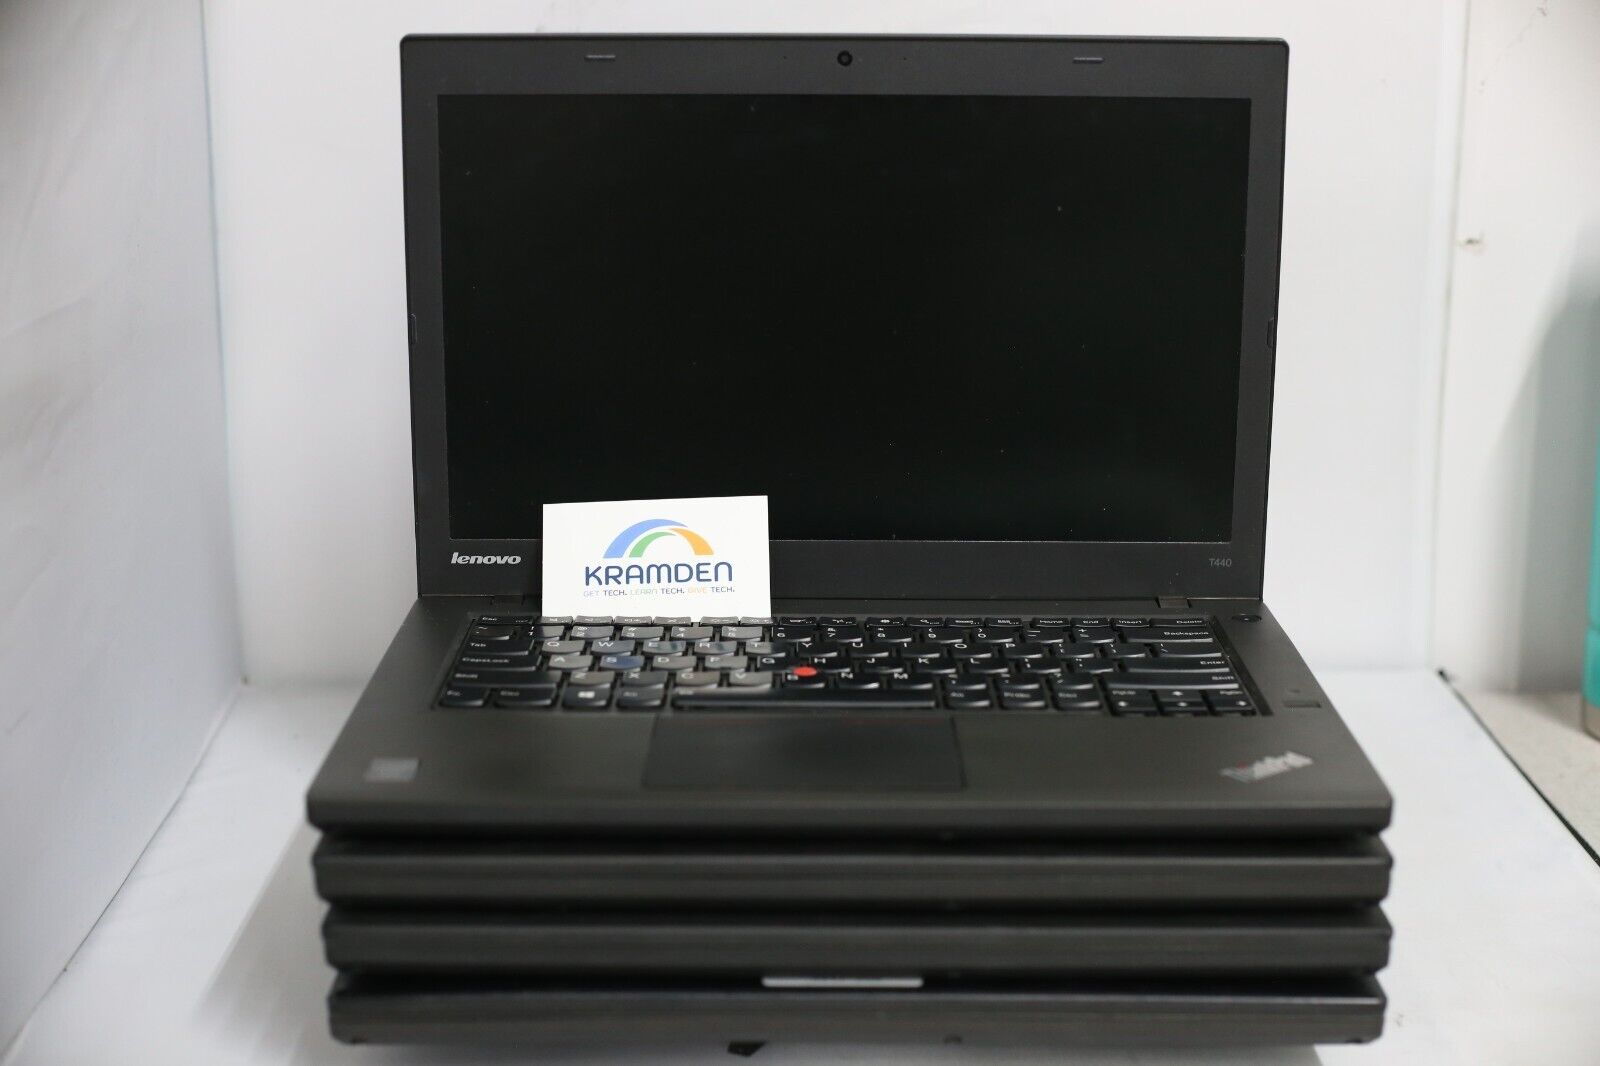 Lot of 4 Lenovo ThinkPad T440 Laptops i5-4300U, 8GB RAM, No HDD/OS, Grade B, C5